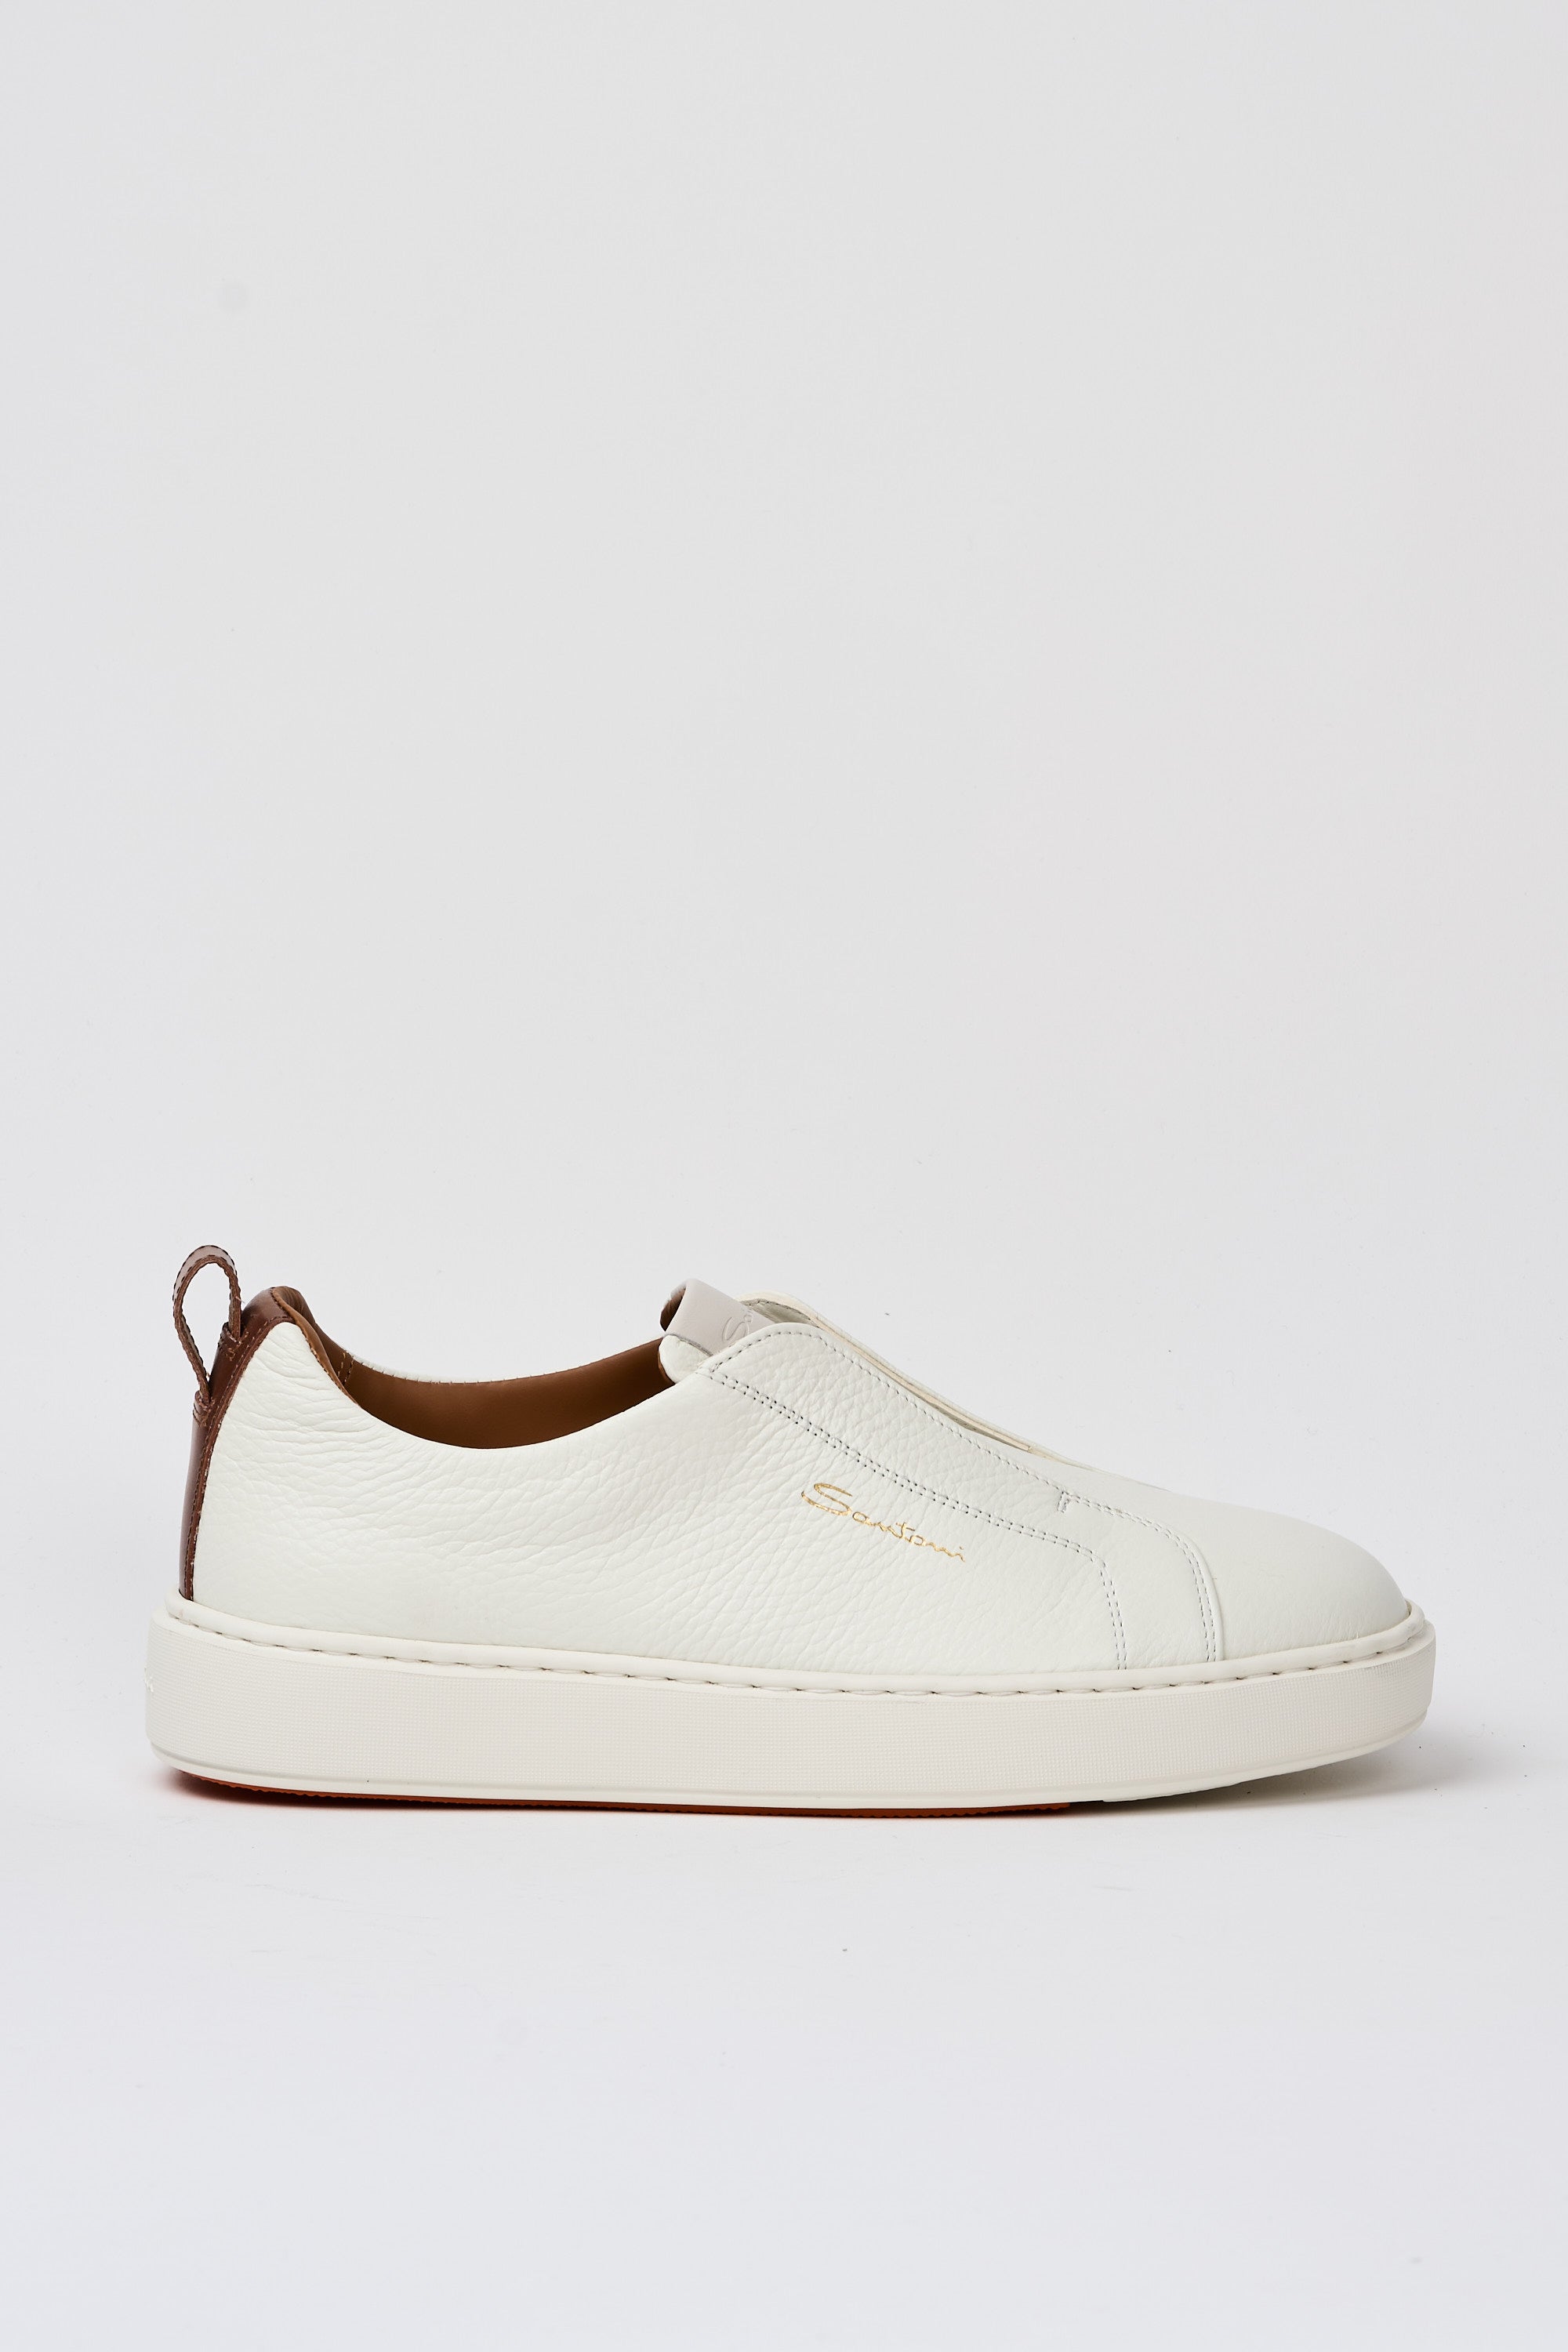 Santoni Slip-On-Sneakers aus weißem Leder-1